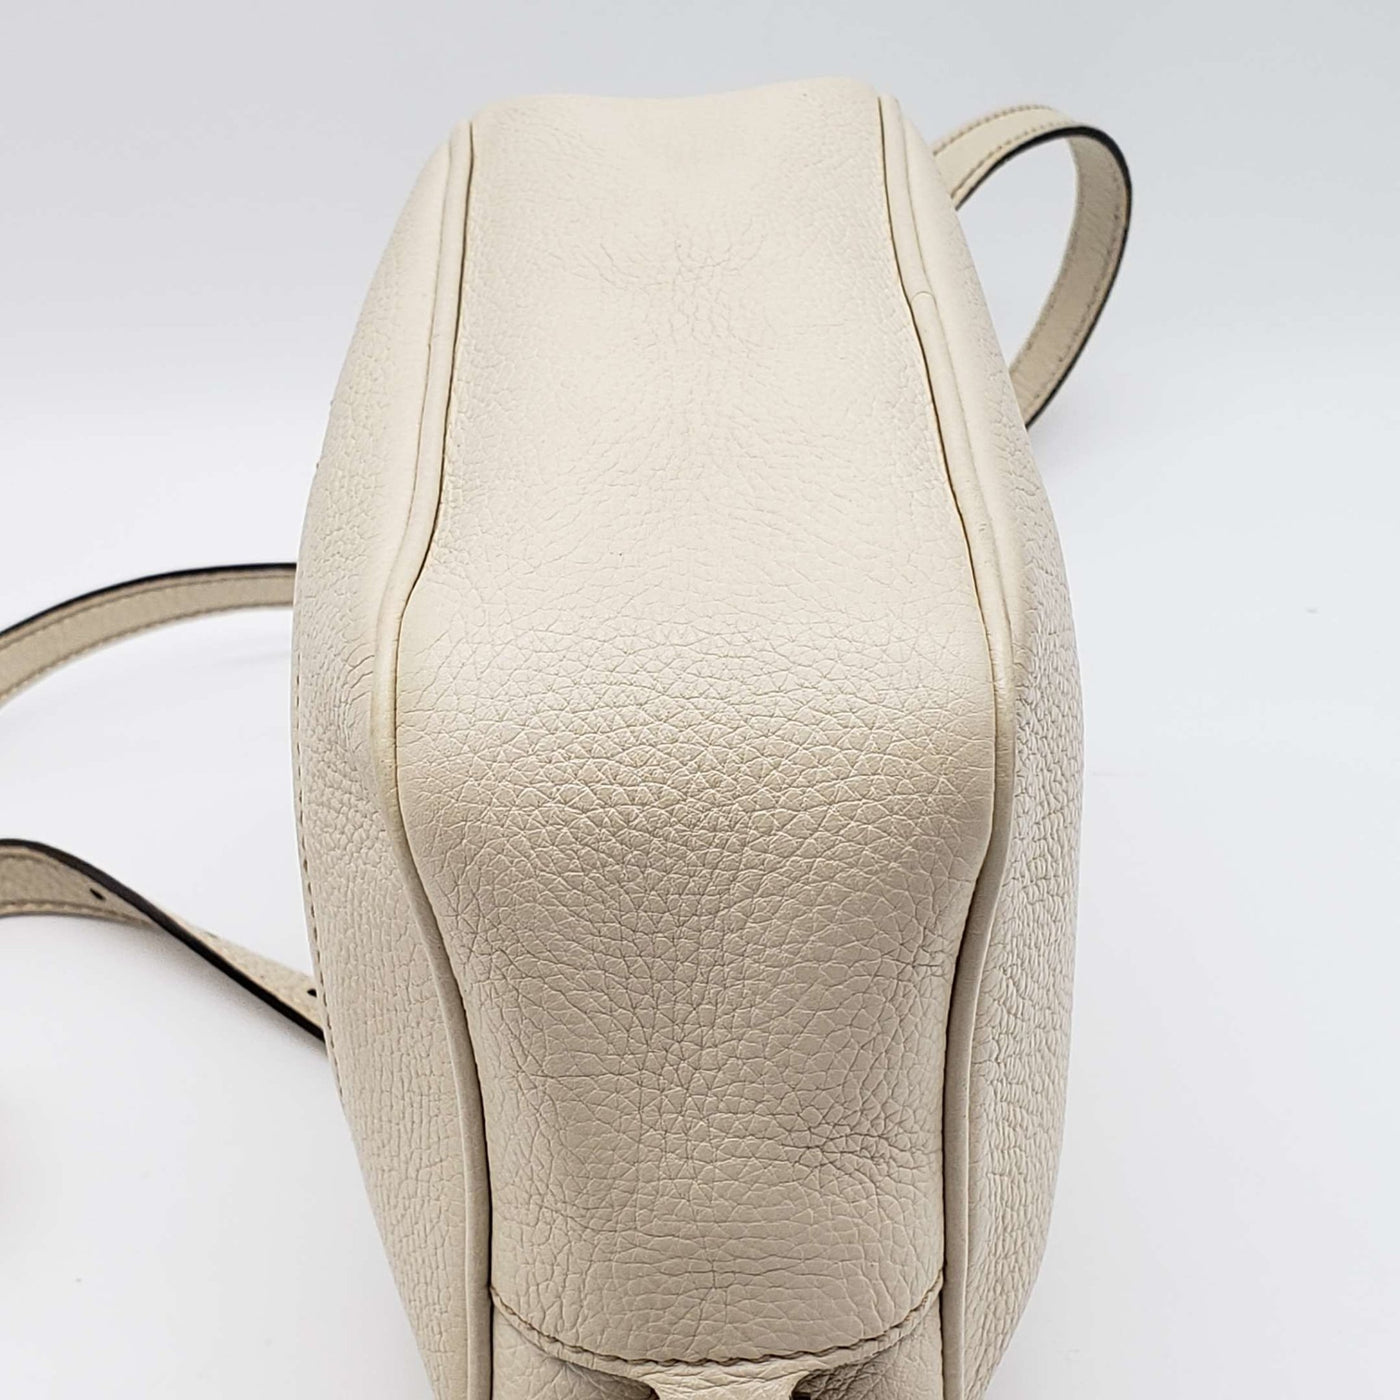 Gucci Disco Soho Camera Crossbody Bag - Luxury Cheaper